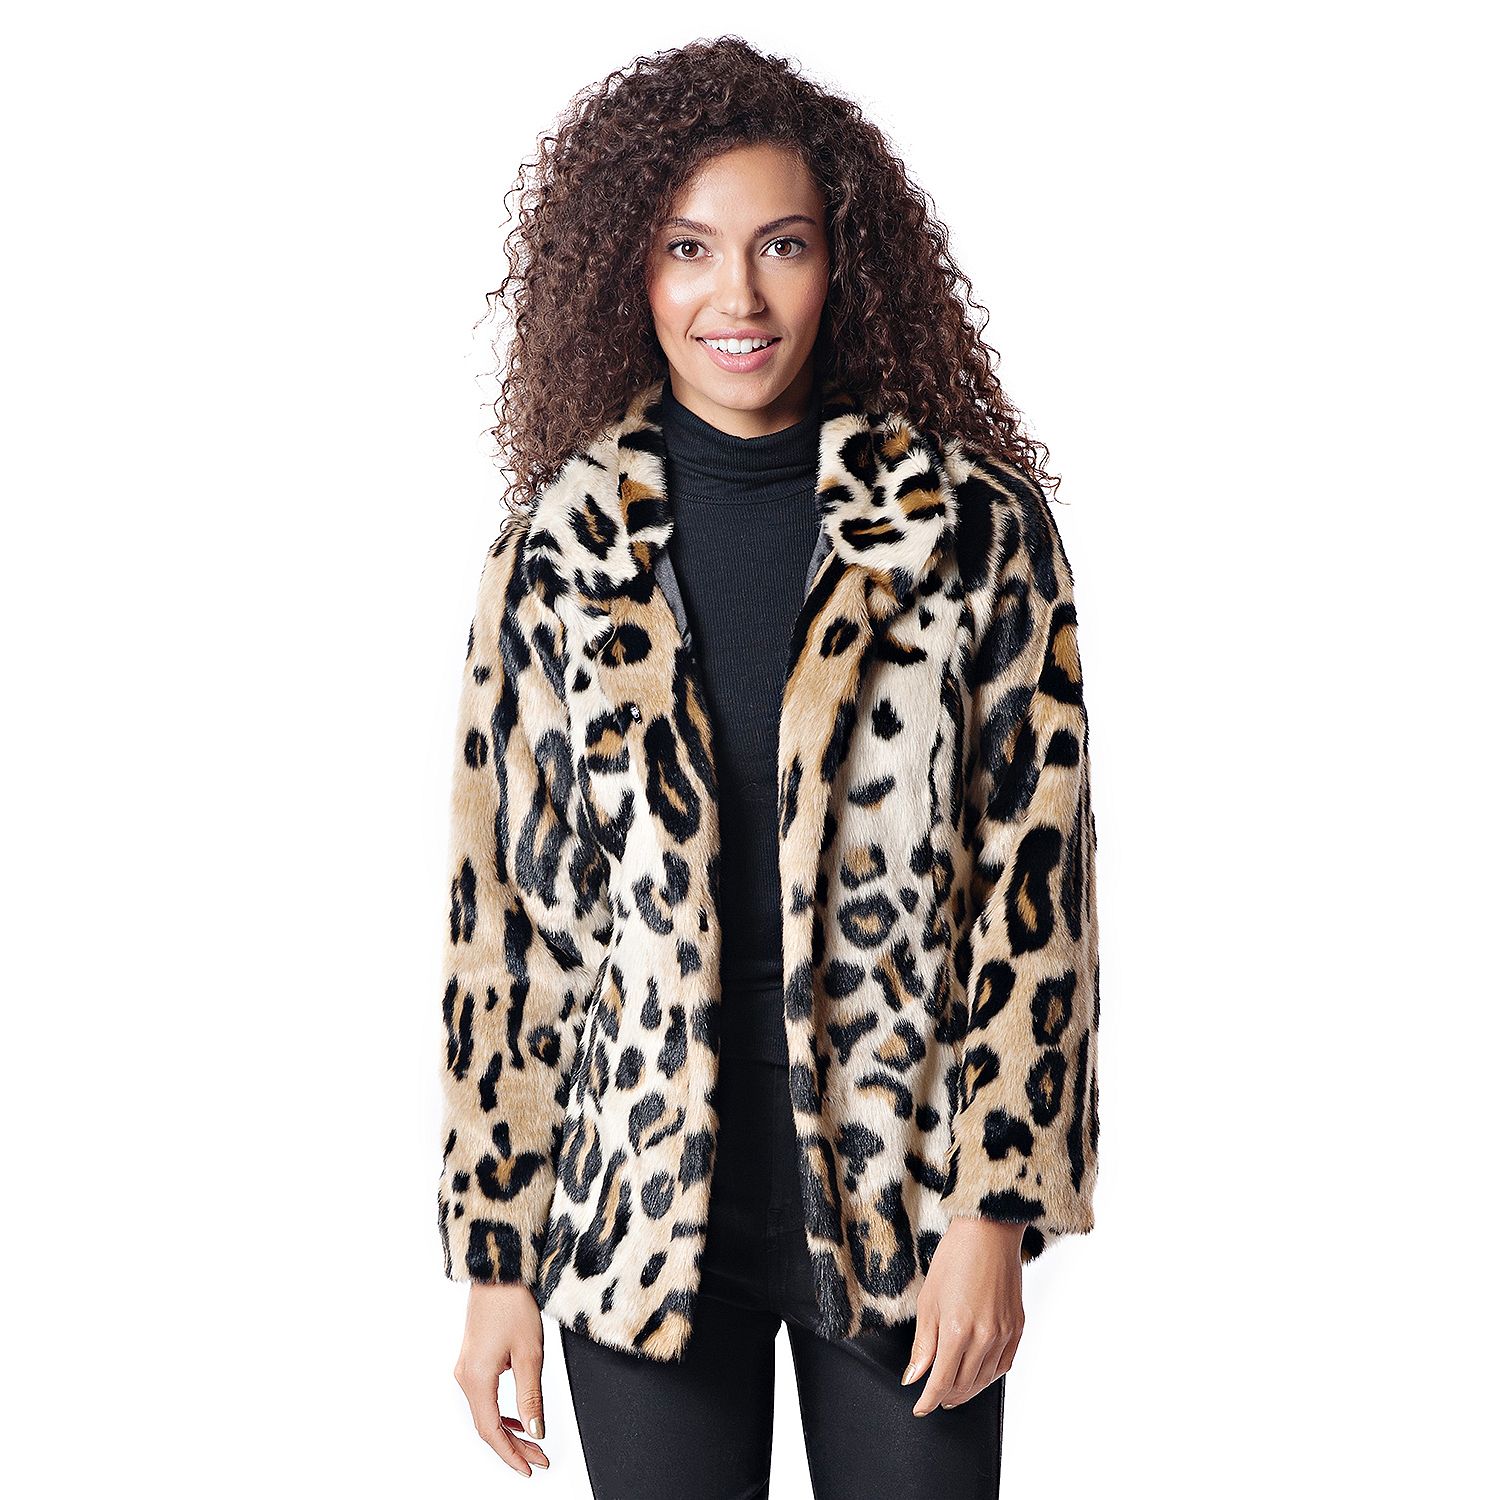 (ShopHQ) Daybreak: Donna Salyers' Fabulous-Furs 